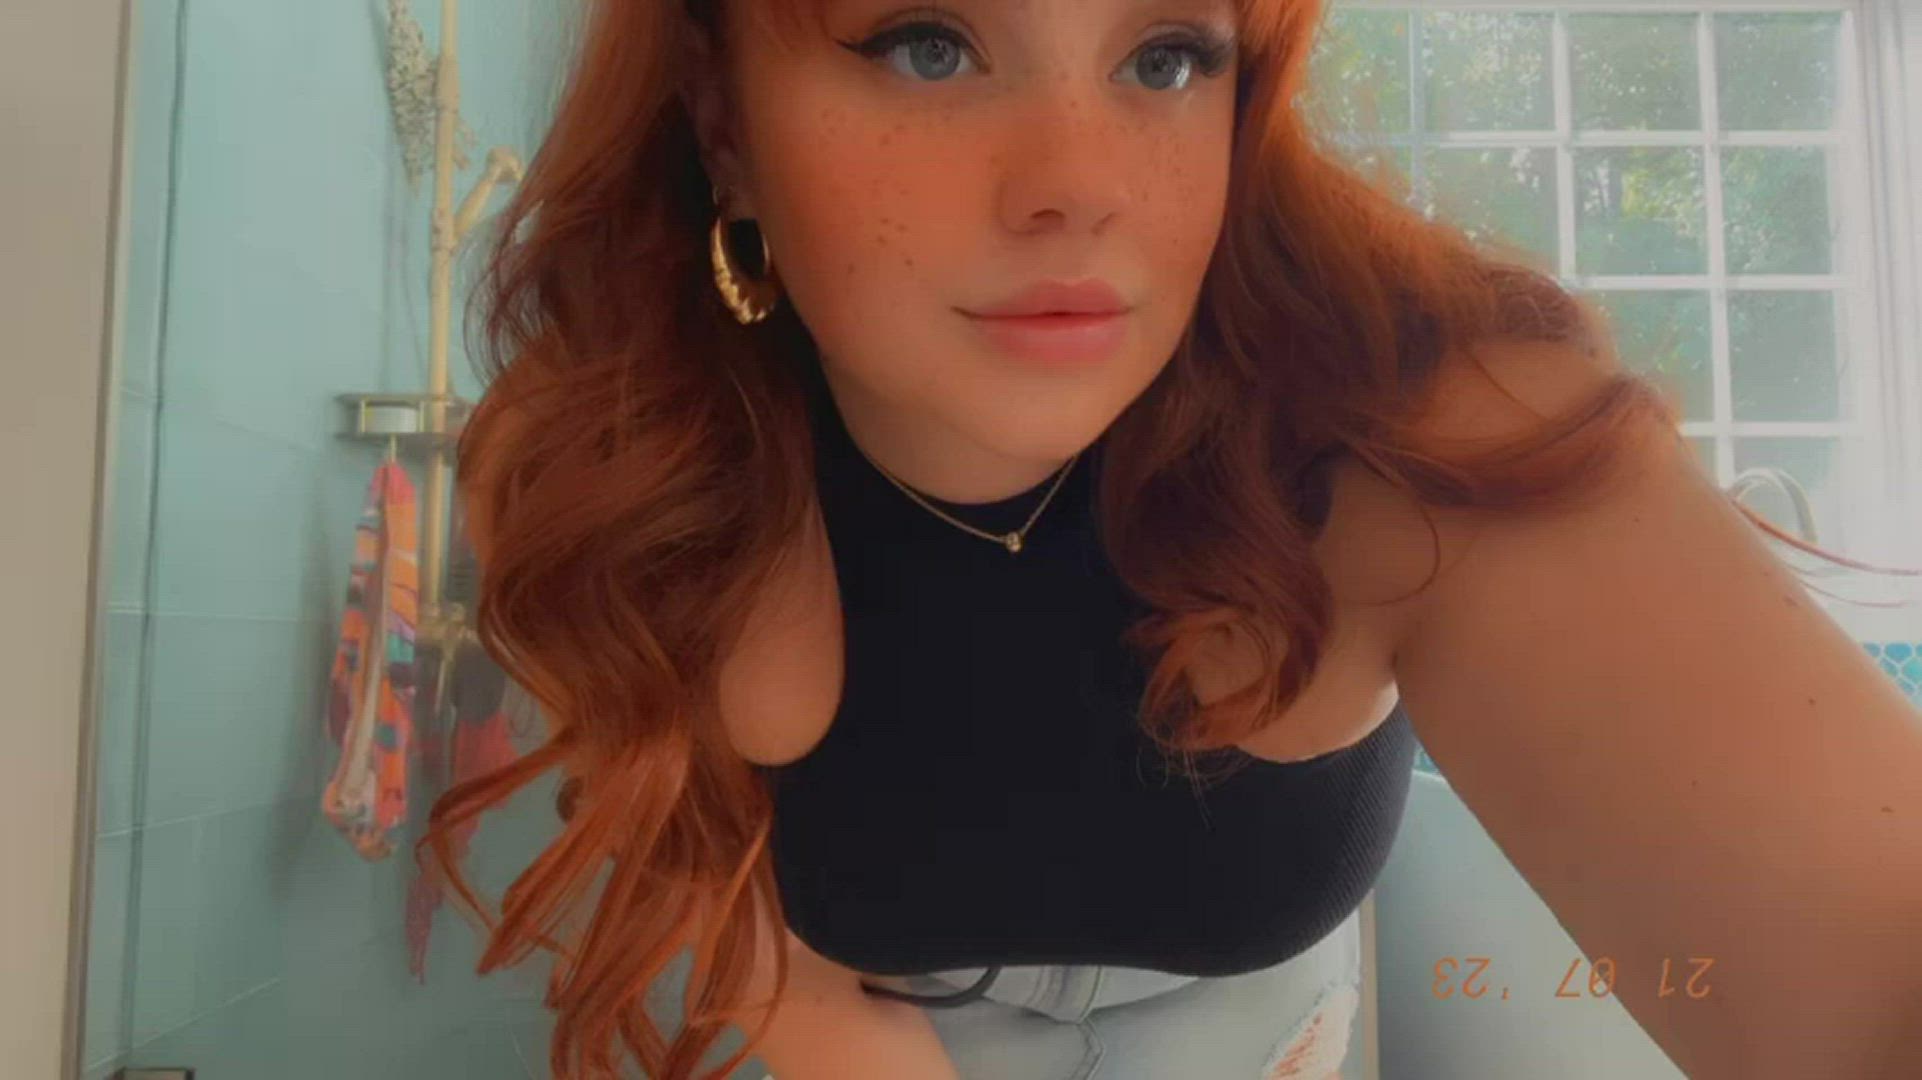 Redhead porn video with onlyfans model Anna Lynn <strong>@annalynn</strong>